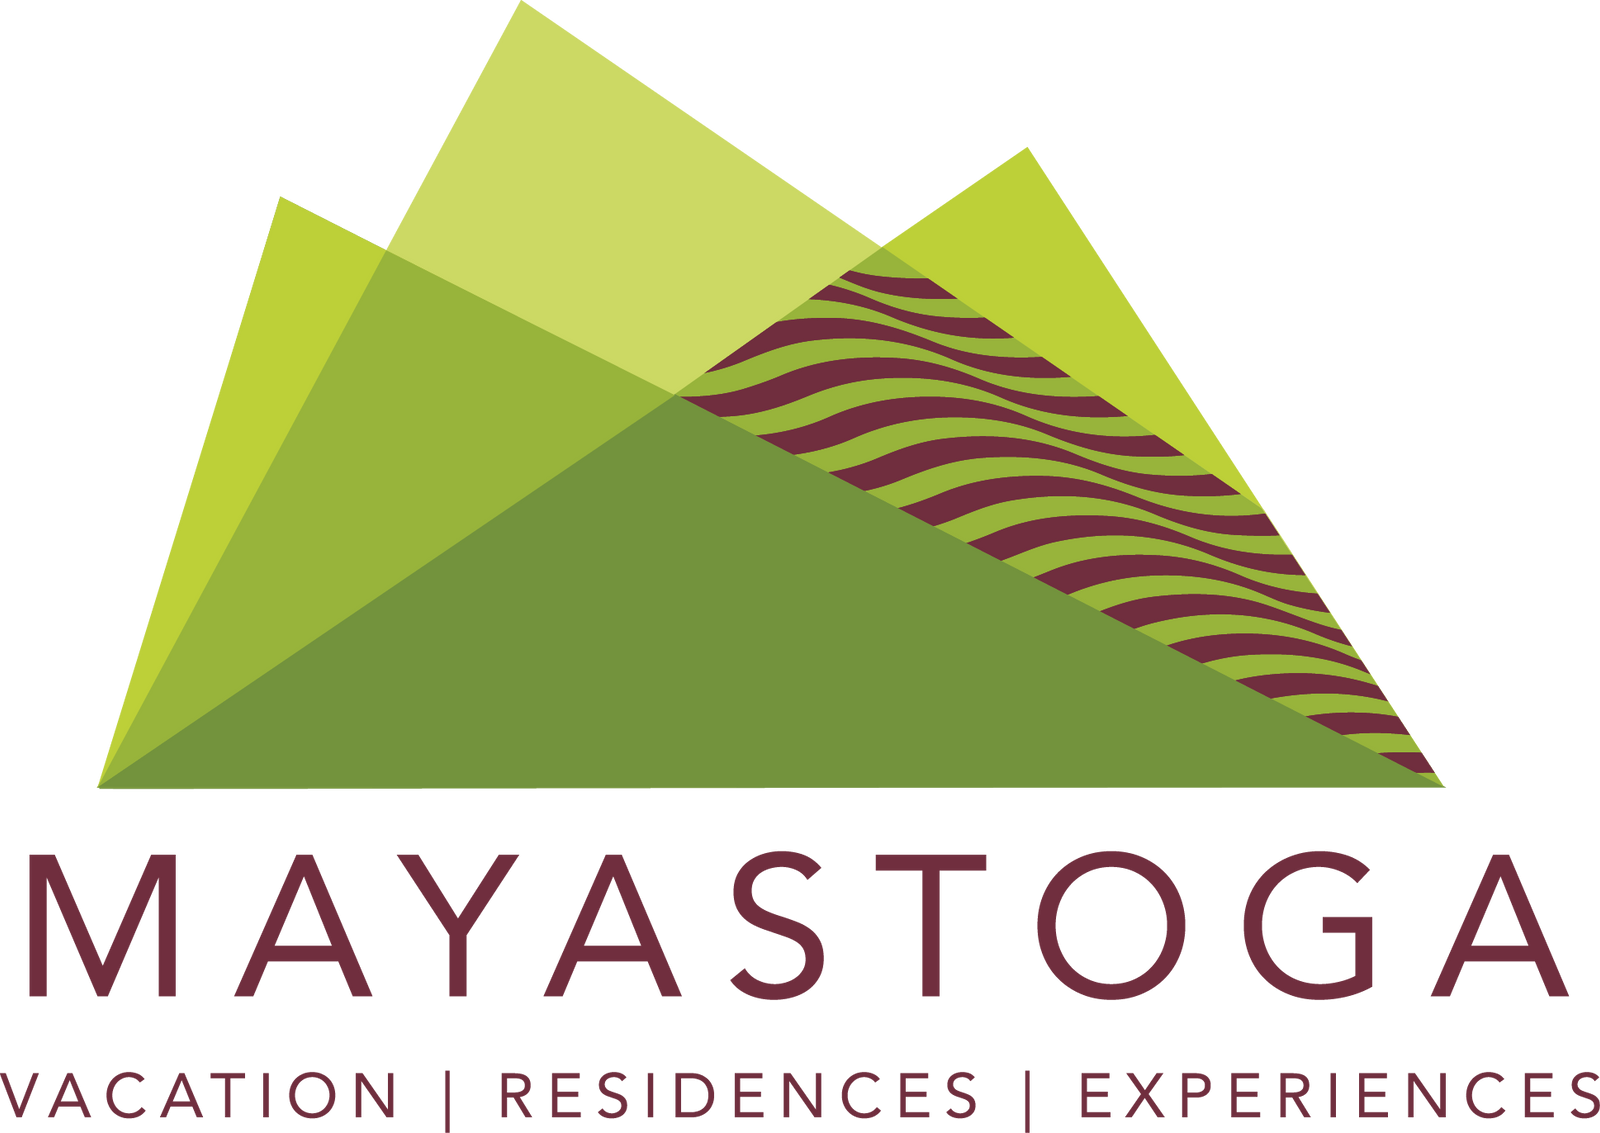 Mayastoga Luxury Vacation Rentals logo: A sophisticated and elegant logo representing Mayastoga Luxury Vacation Rentals, a premier vacation rental company in Napa Valley. 